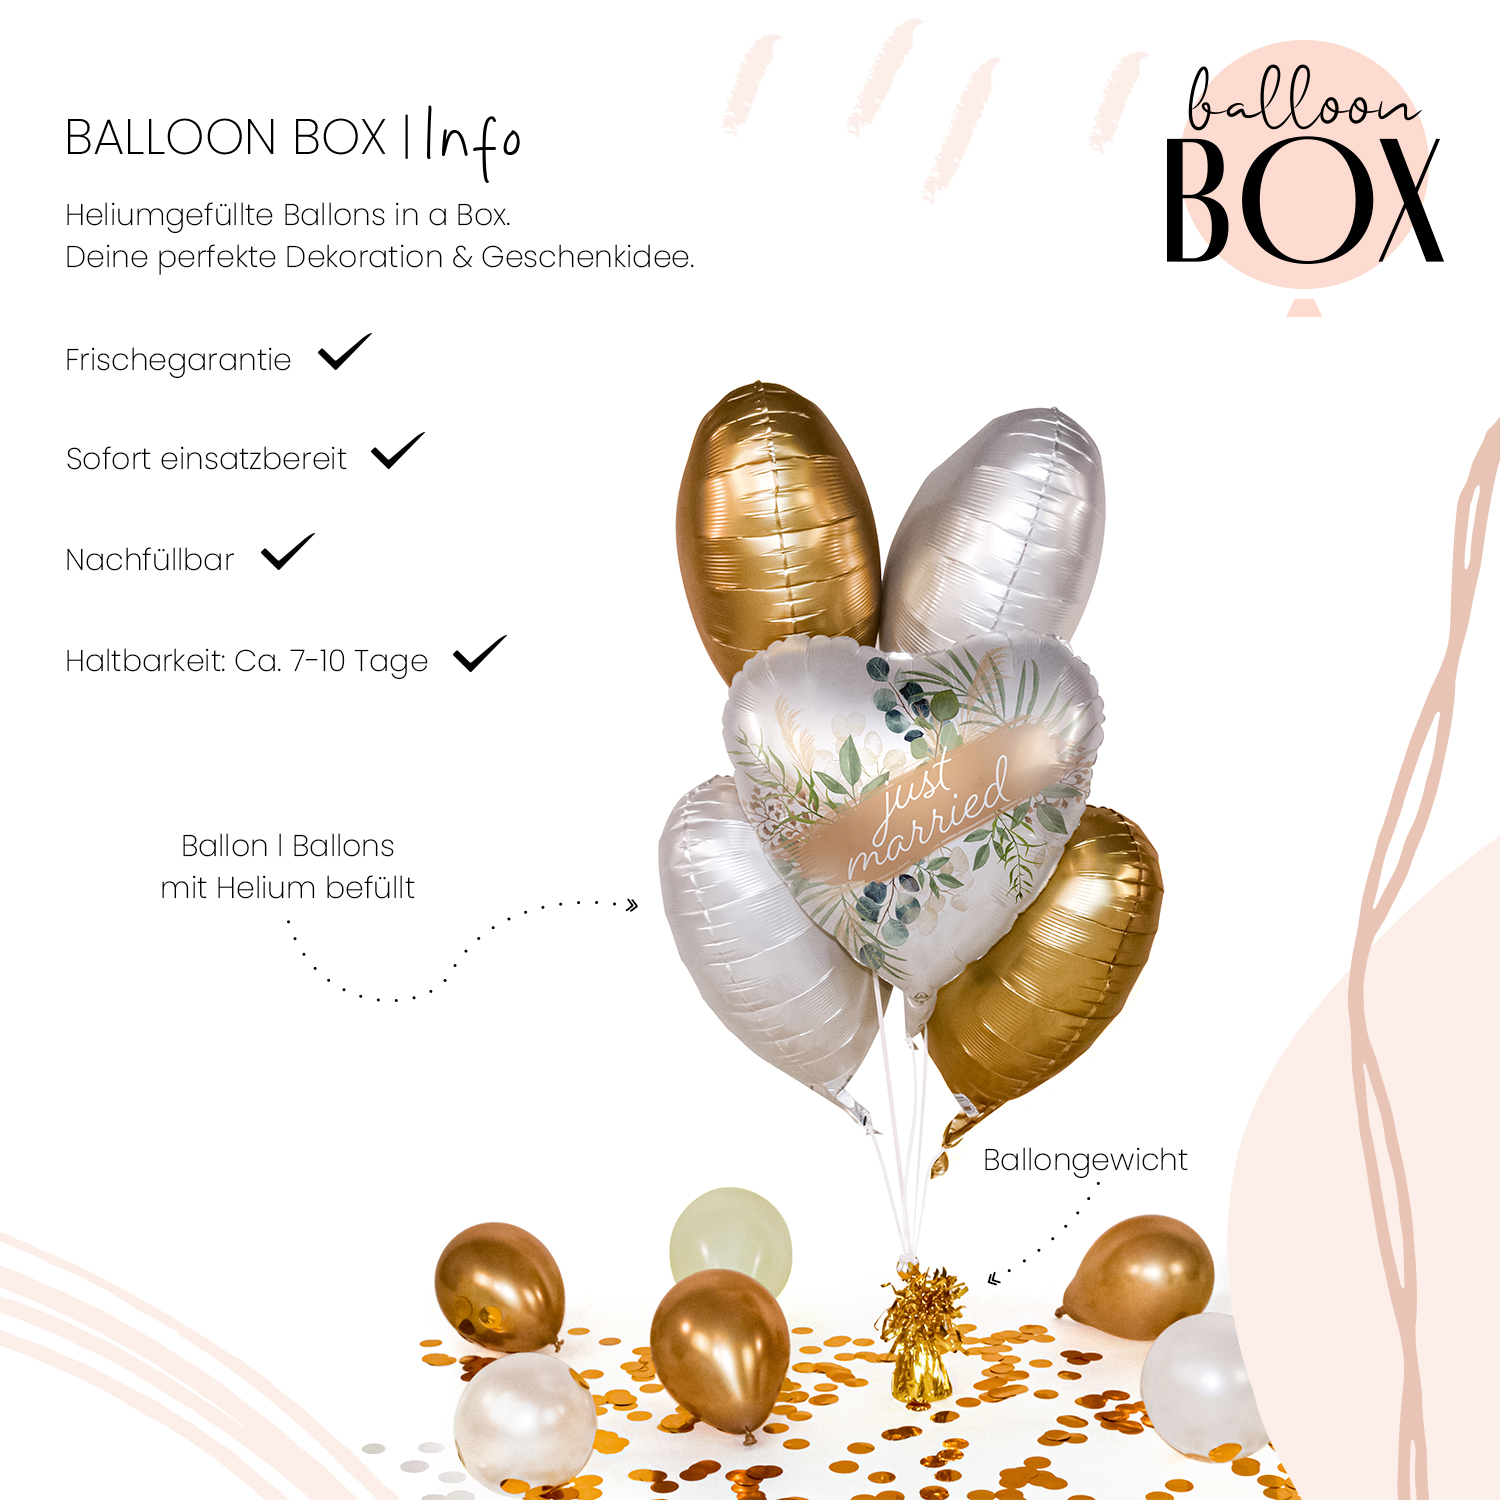 Heliumballon in a Box - Wedding Natural Frame